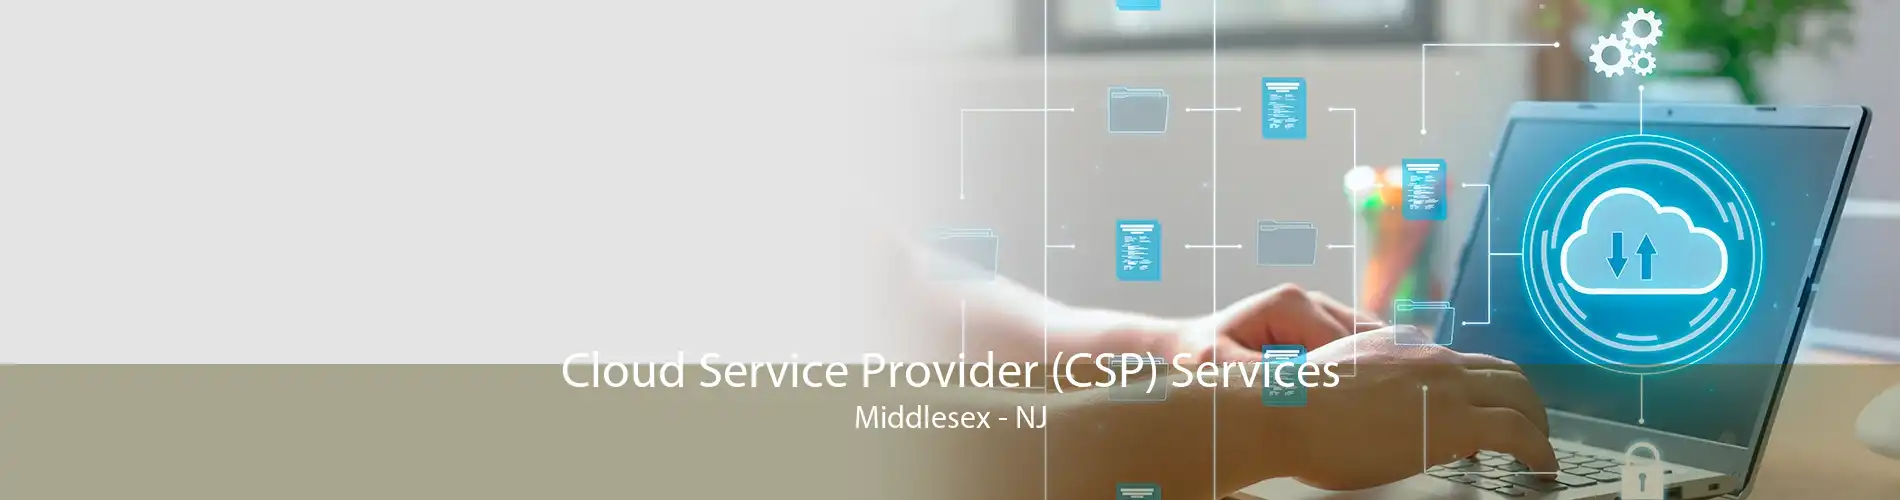 Cloud Service Provider (CSP) Services Middlesex - NJ